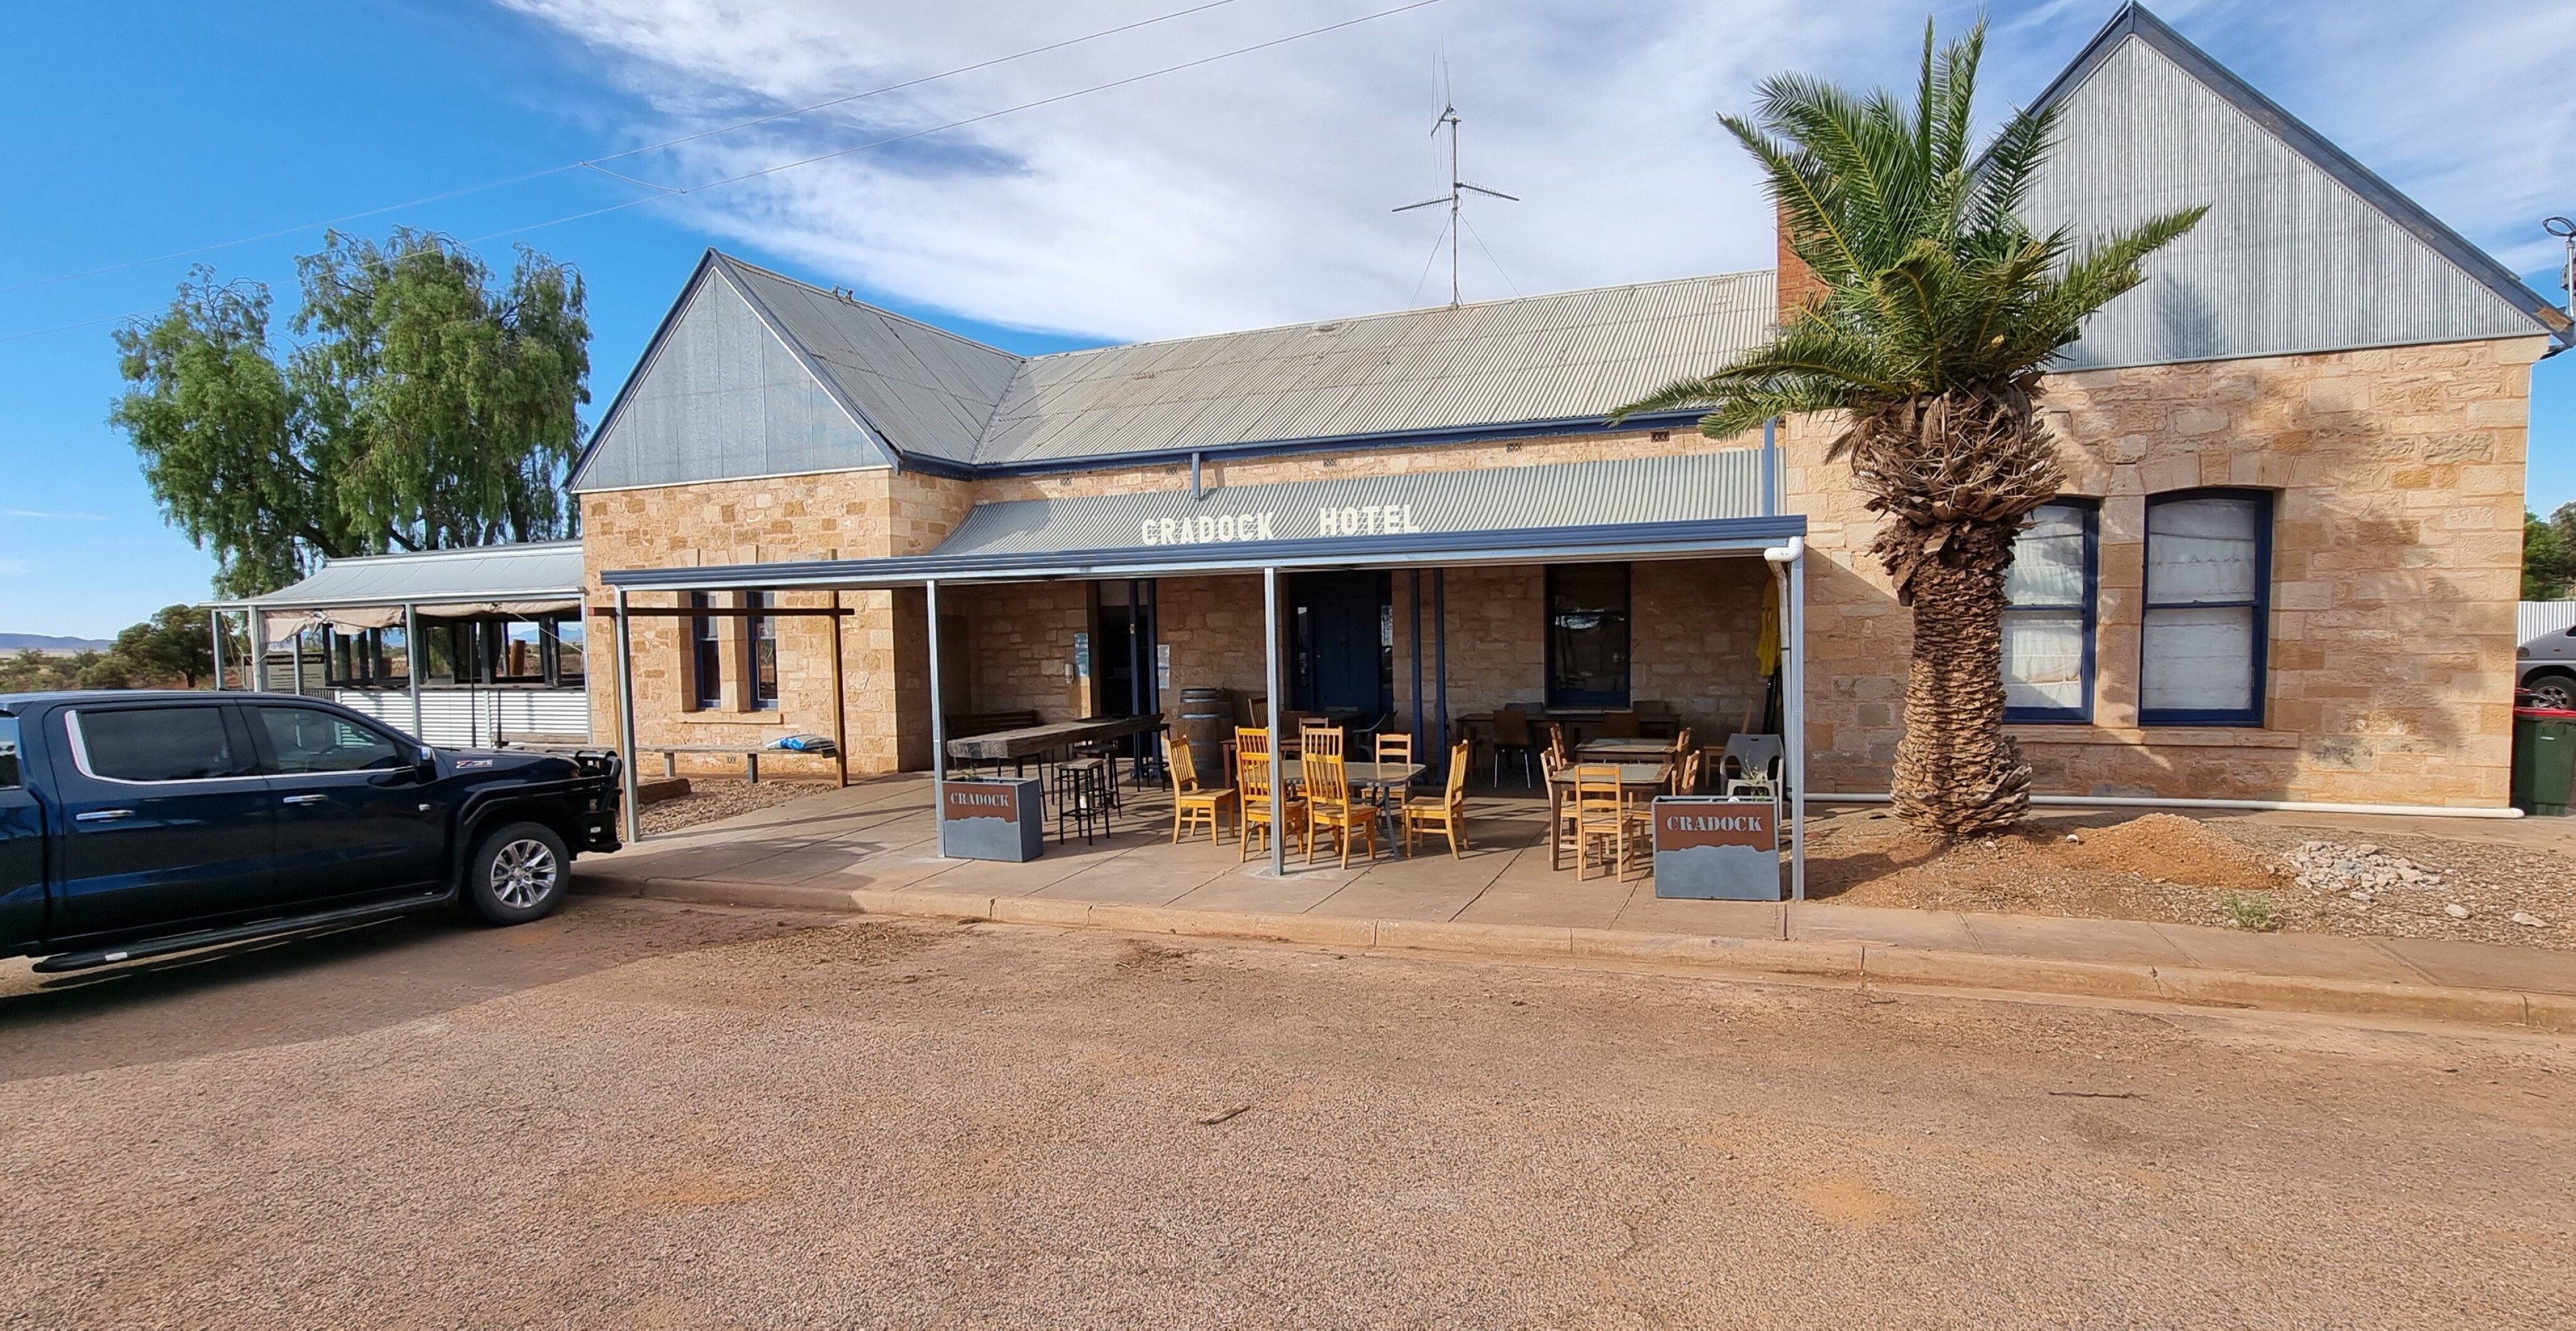 494025f9/cradock hotel 2022 cradock hotel south australia outback pub crawl 4x4 australia jpg